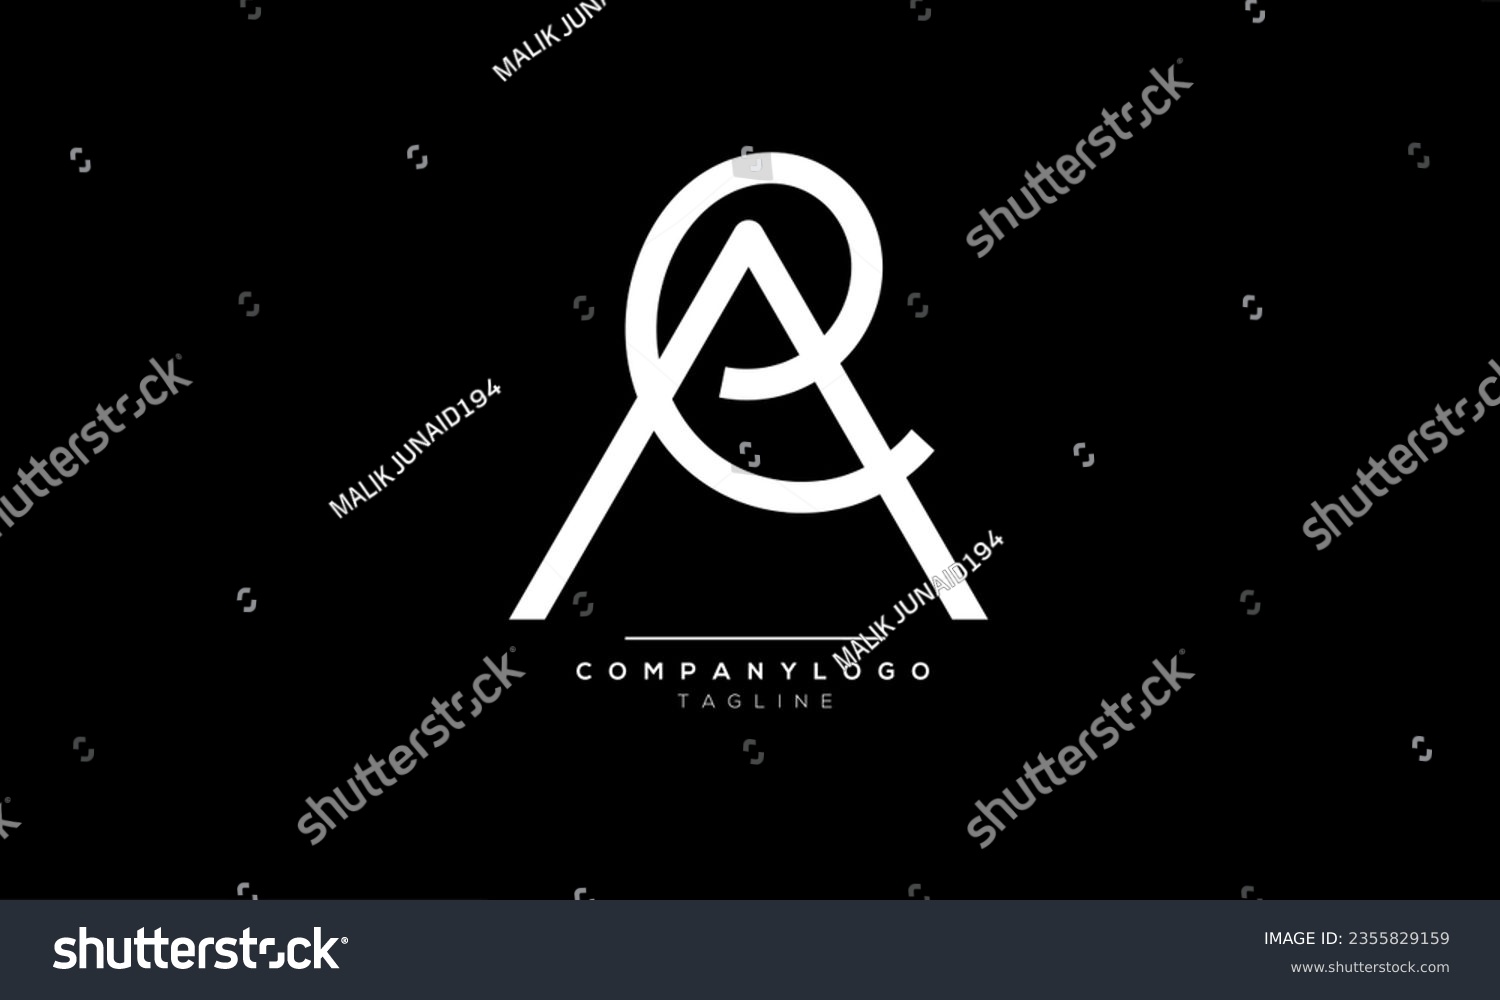 SVG of Alphabet letters Initials Monogram logo AE, AE INITIAL, AE letter svg